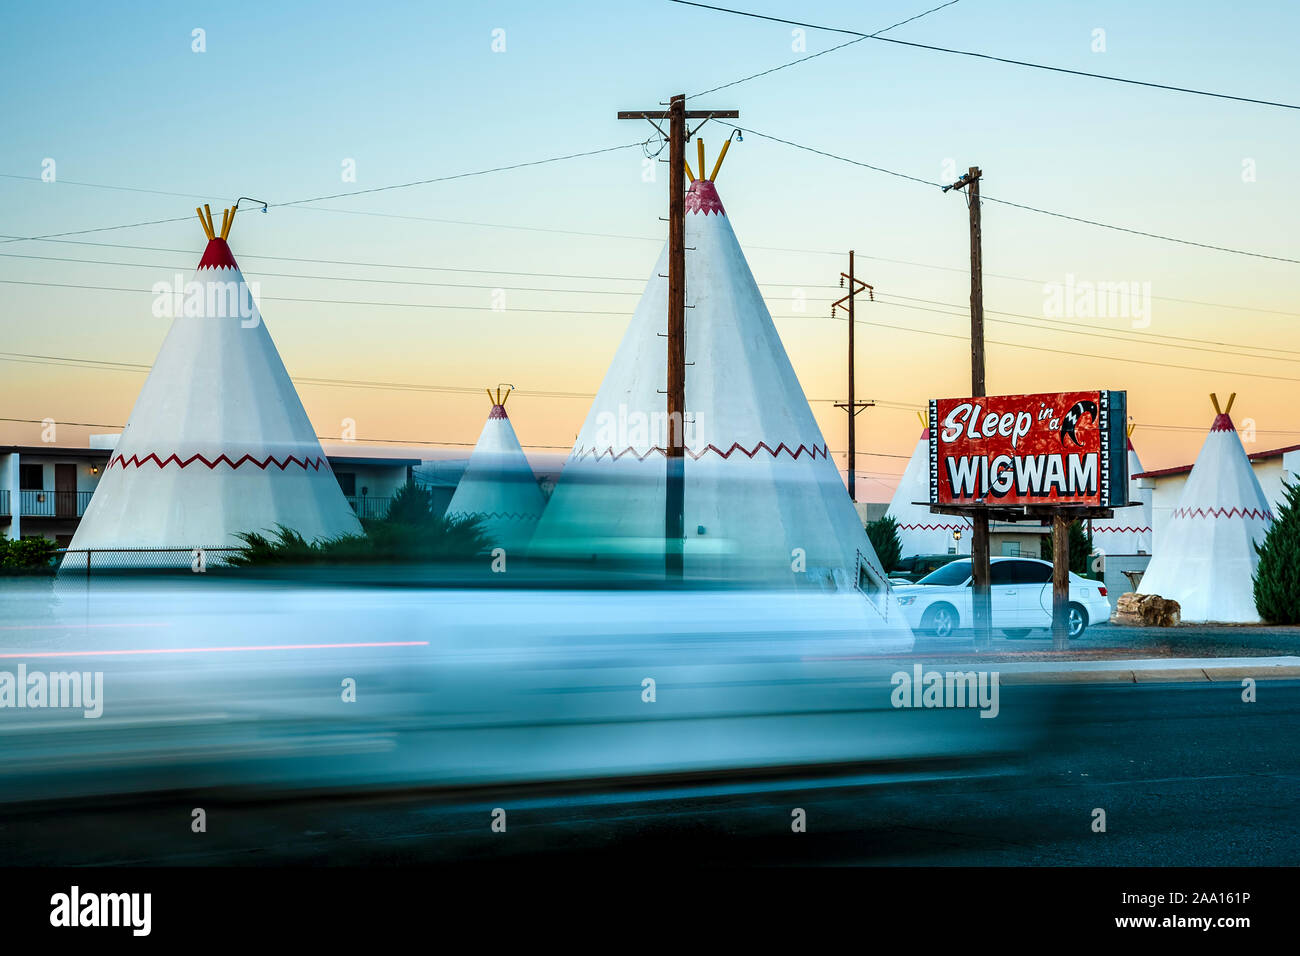 Teepees/wigwams and streaking car, Wigwam Motel, Route 66, Holbrook, Arizona USA Stock Photo